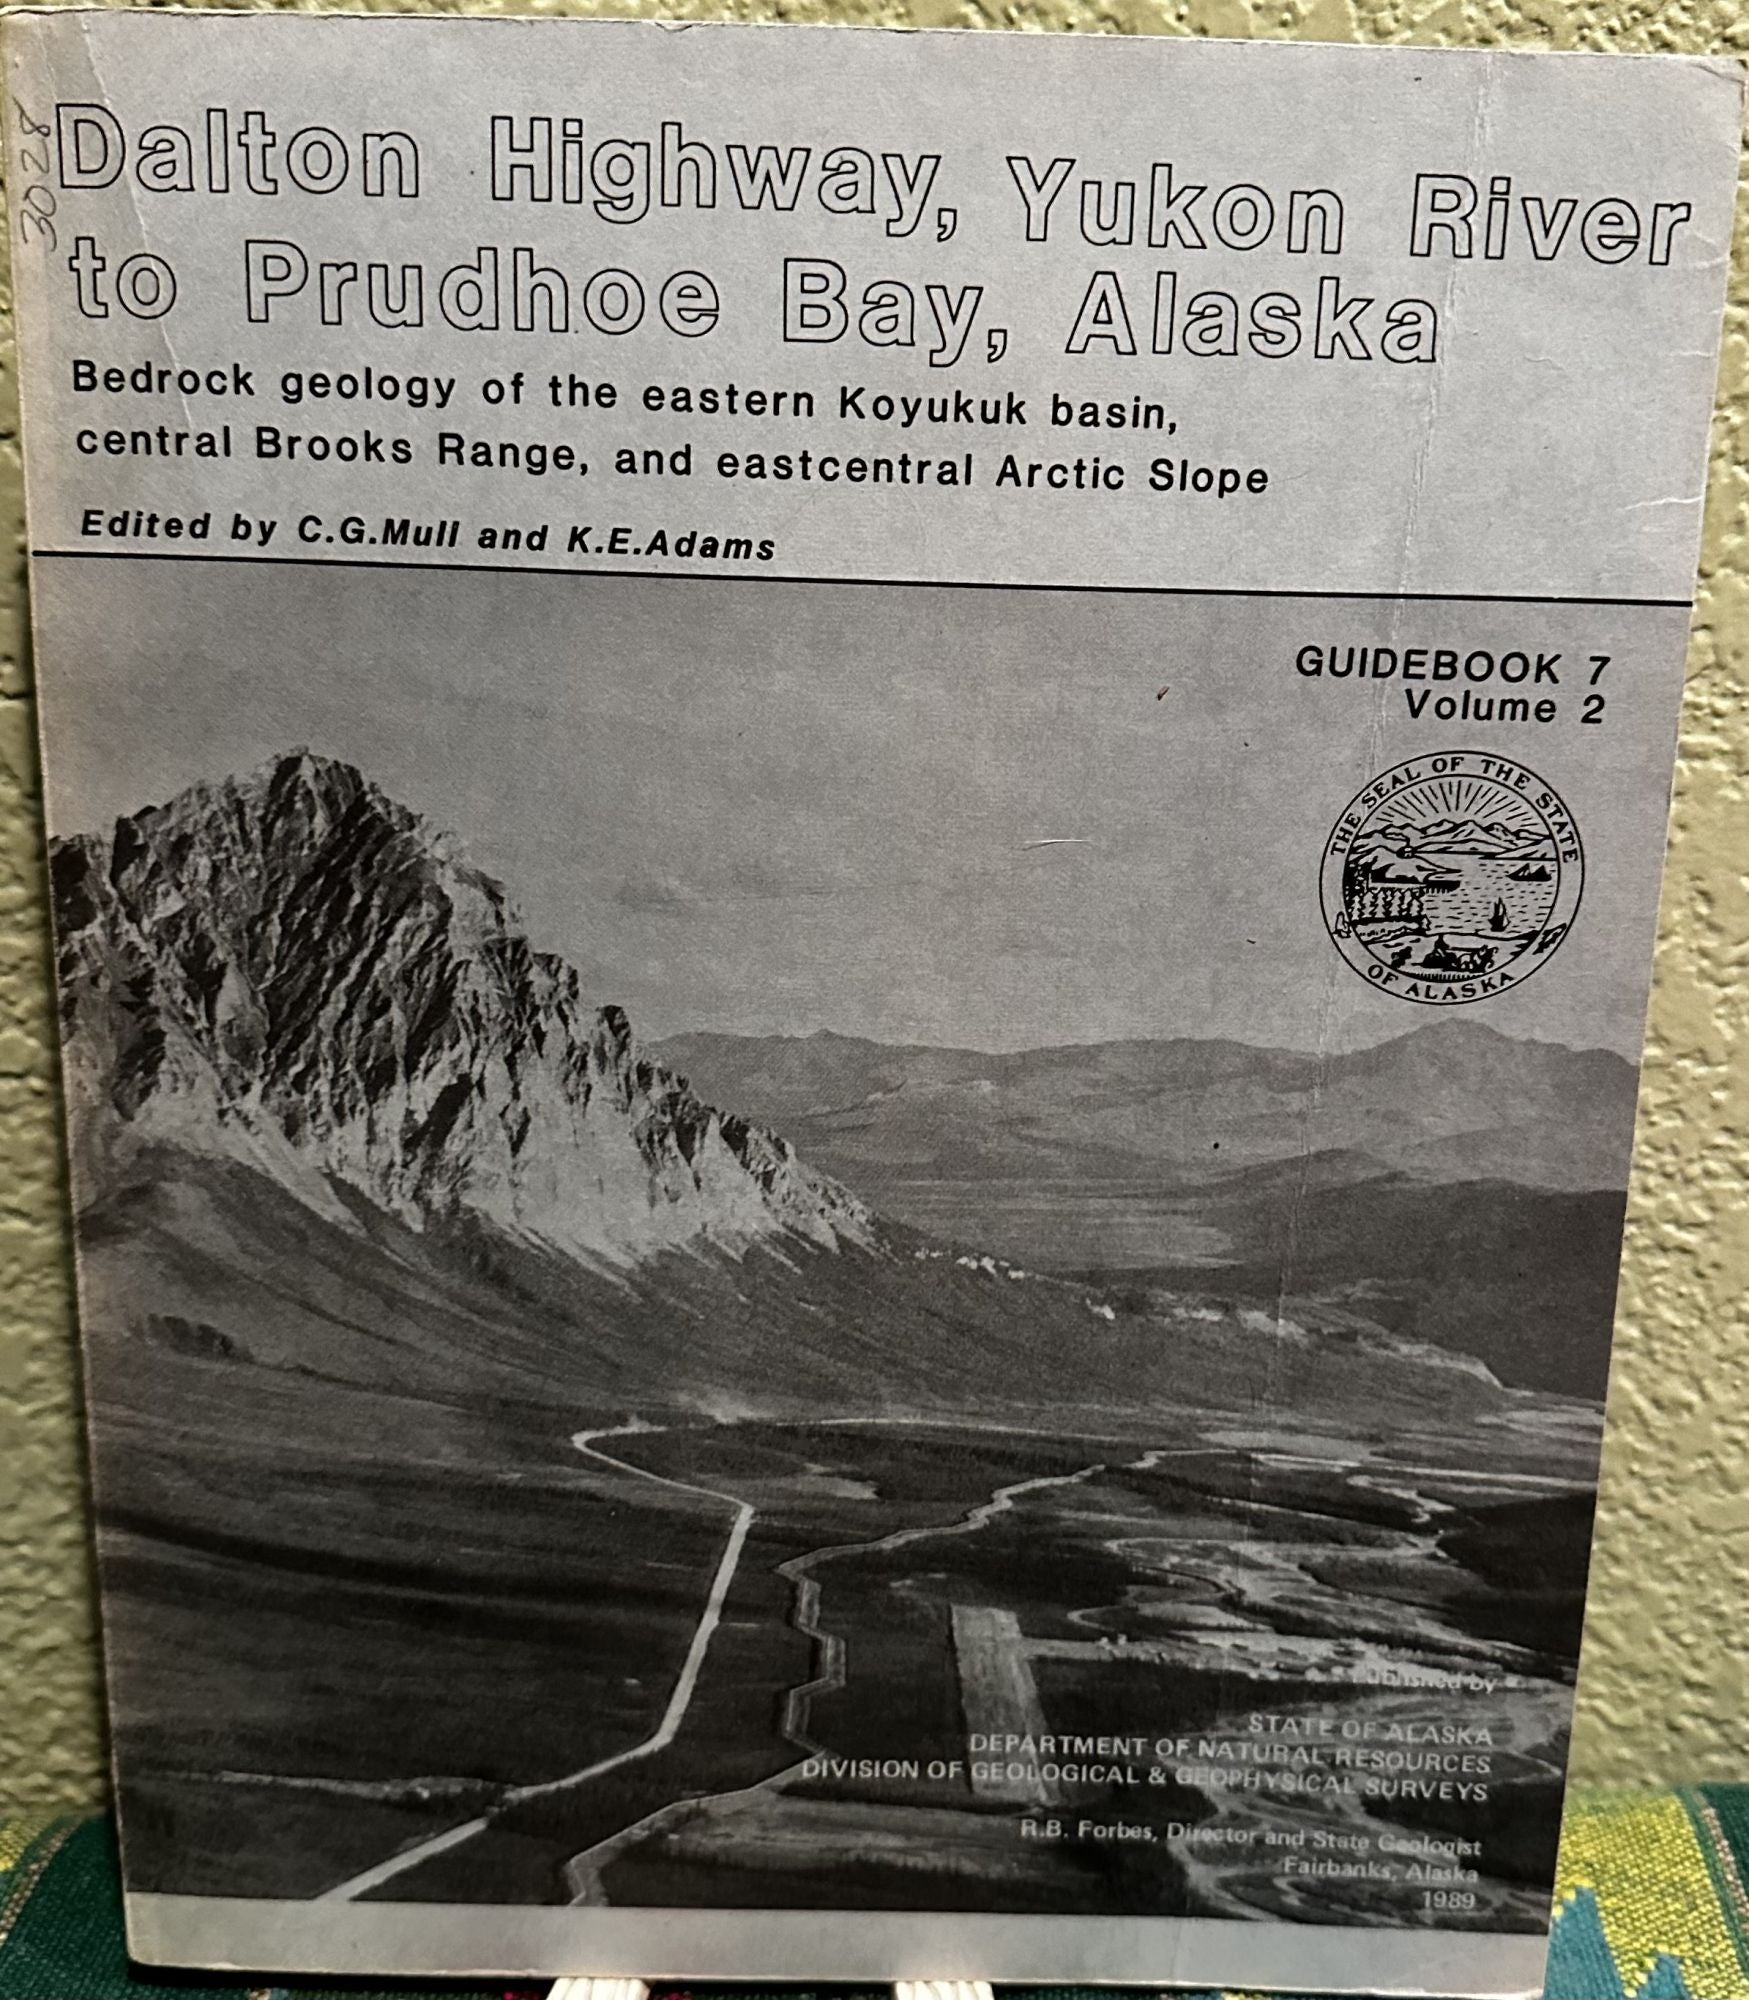 Dalton Highway, Yukon River to Prudhoe Bay, Alaska Guidebook 7 Volume 2. C. G. Mull, K. E. Adams, Edted by.